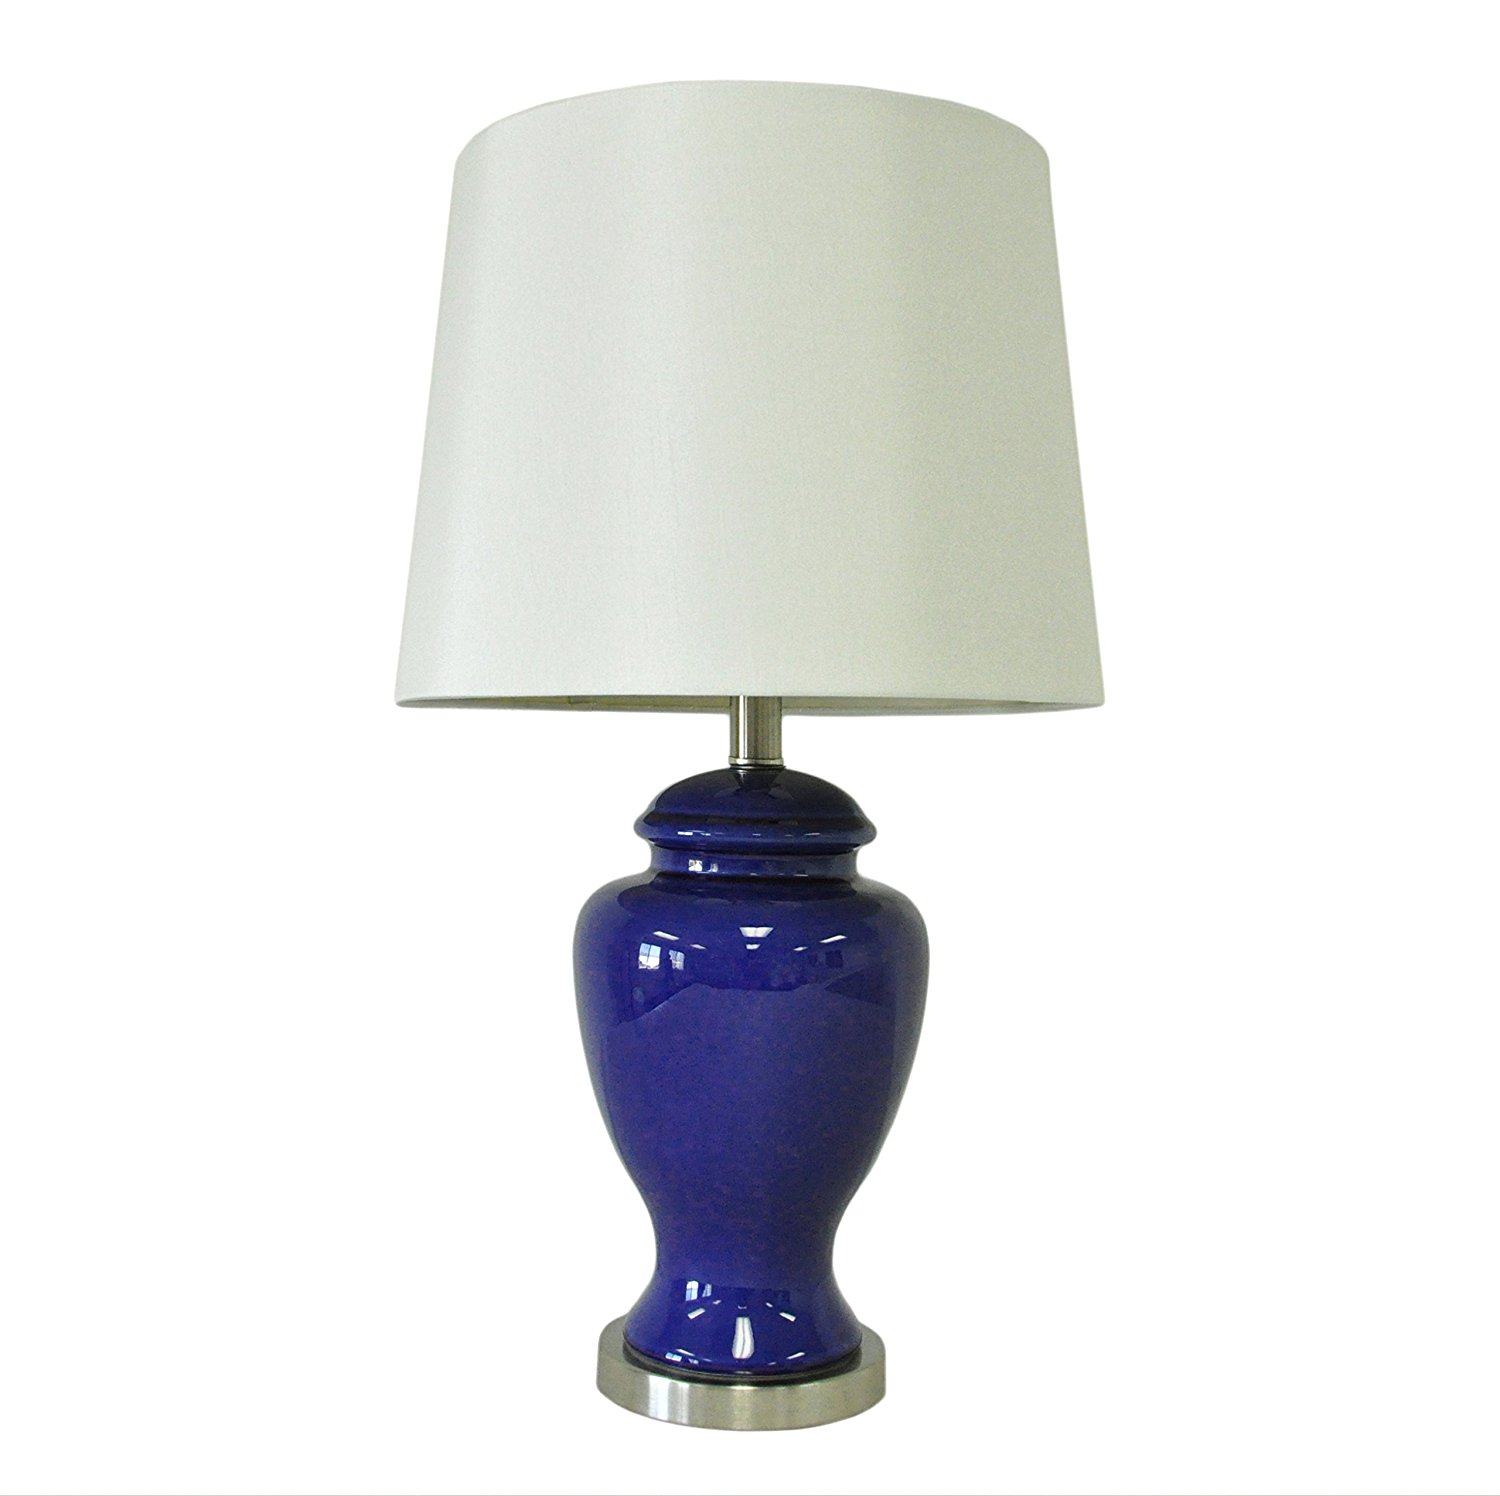 24" Classic Blue Ceramic Ginger Jar Table Lamp Desk Lamps Bedroom Living Room